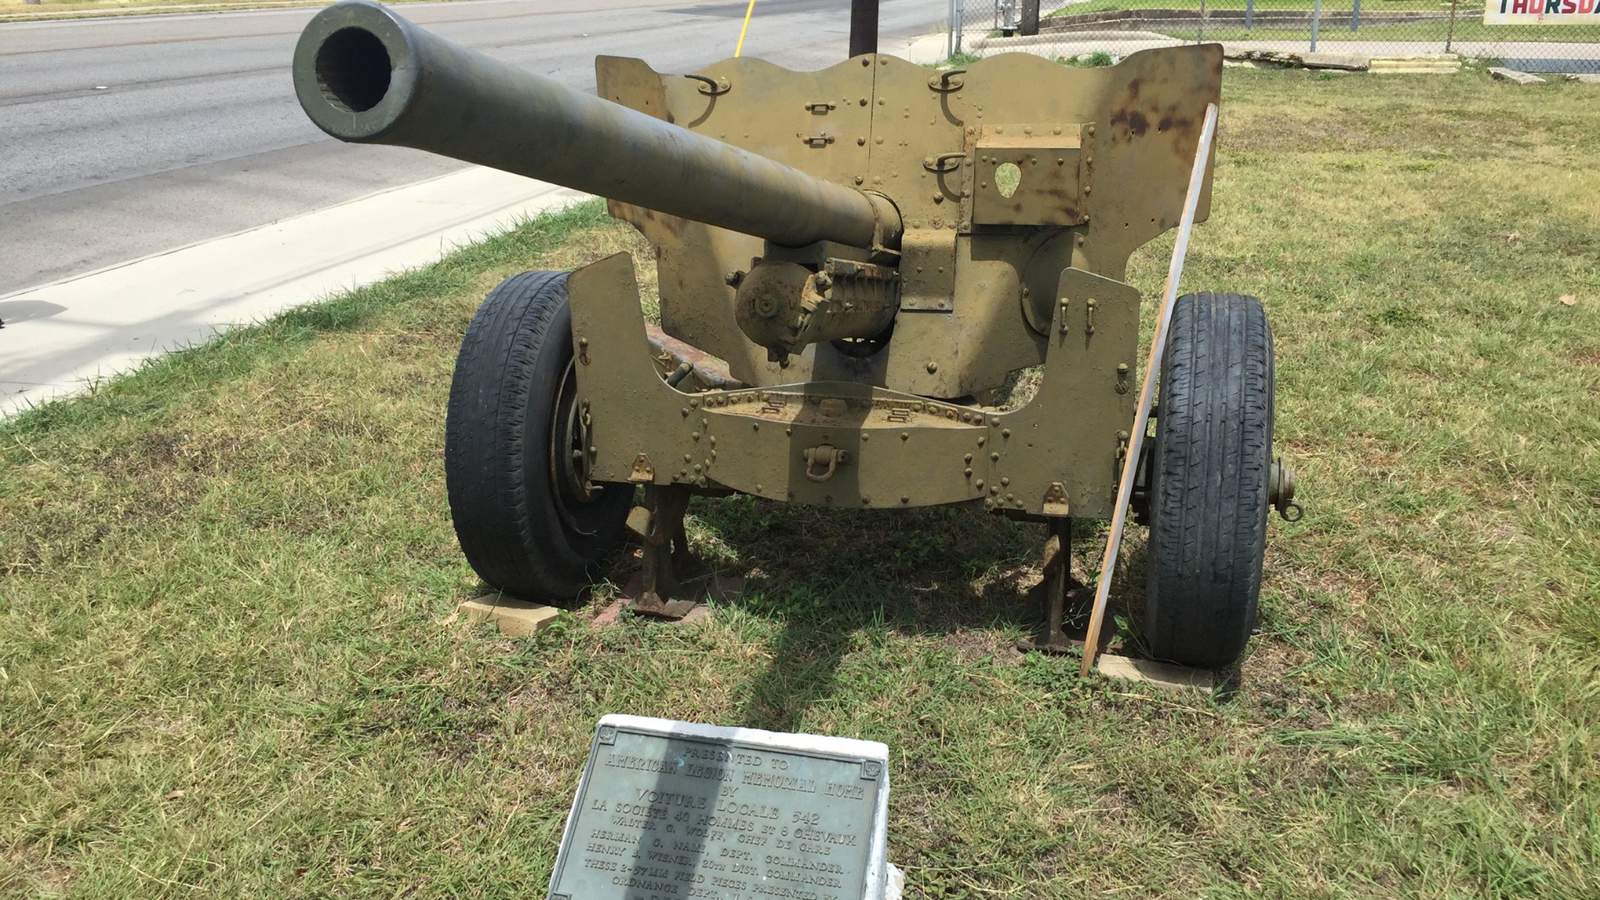 World War II cannon stolen from American Legion post in San Antonio